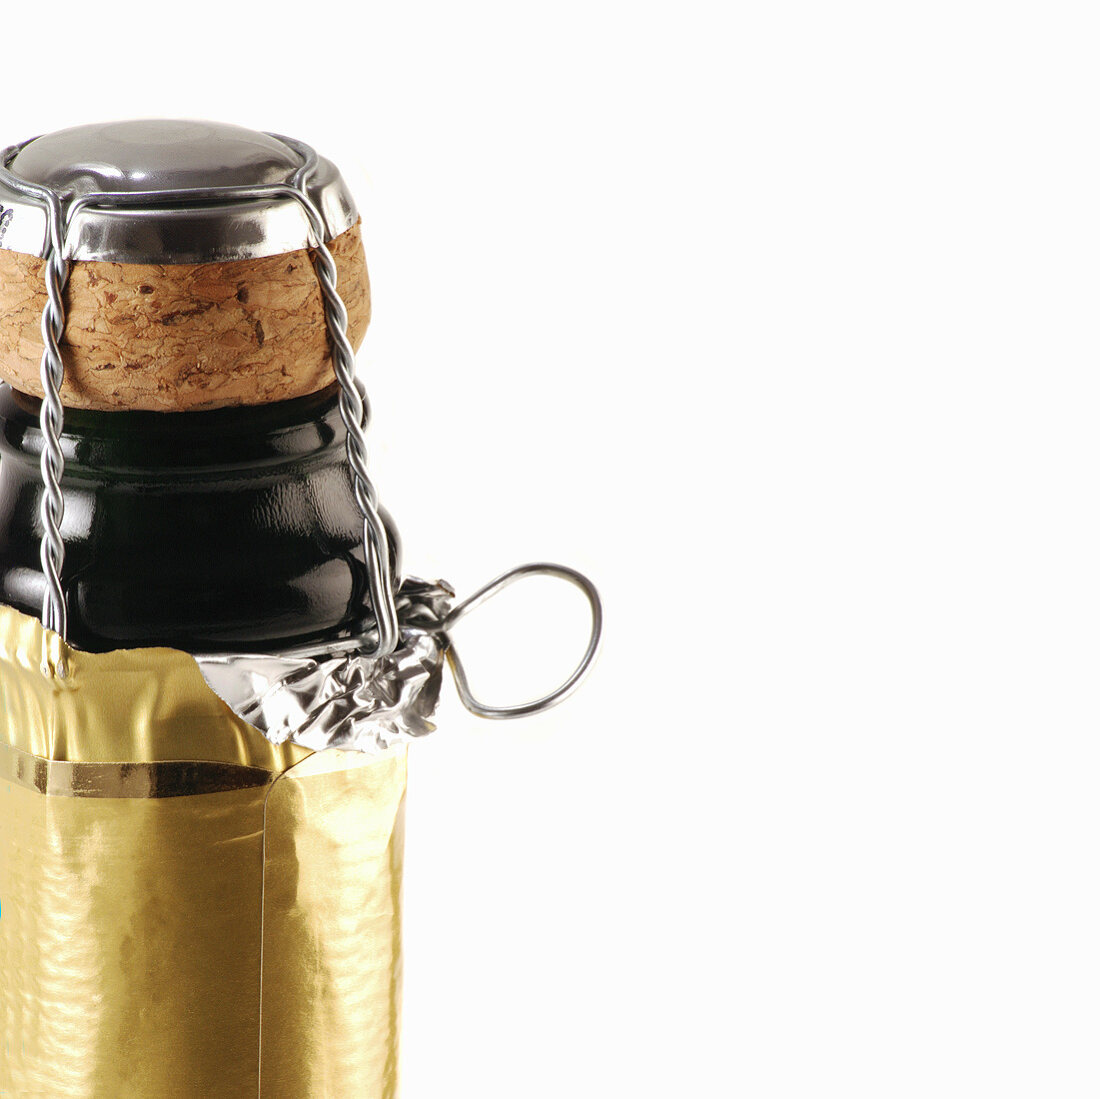 Sparkling wine bottle closure